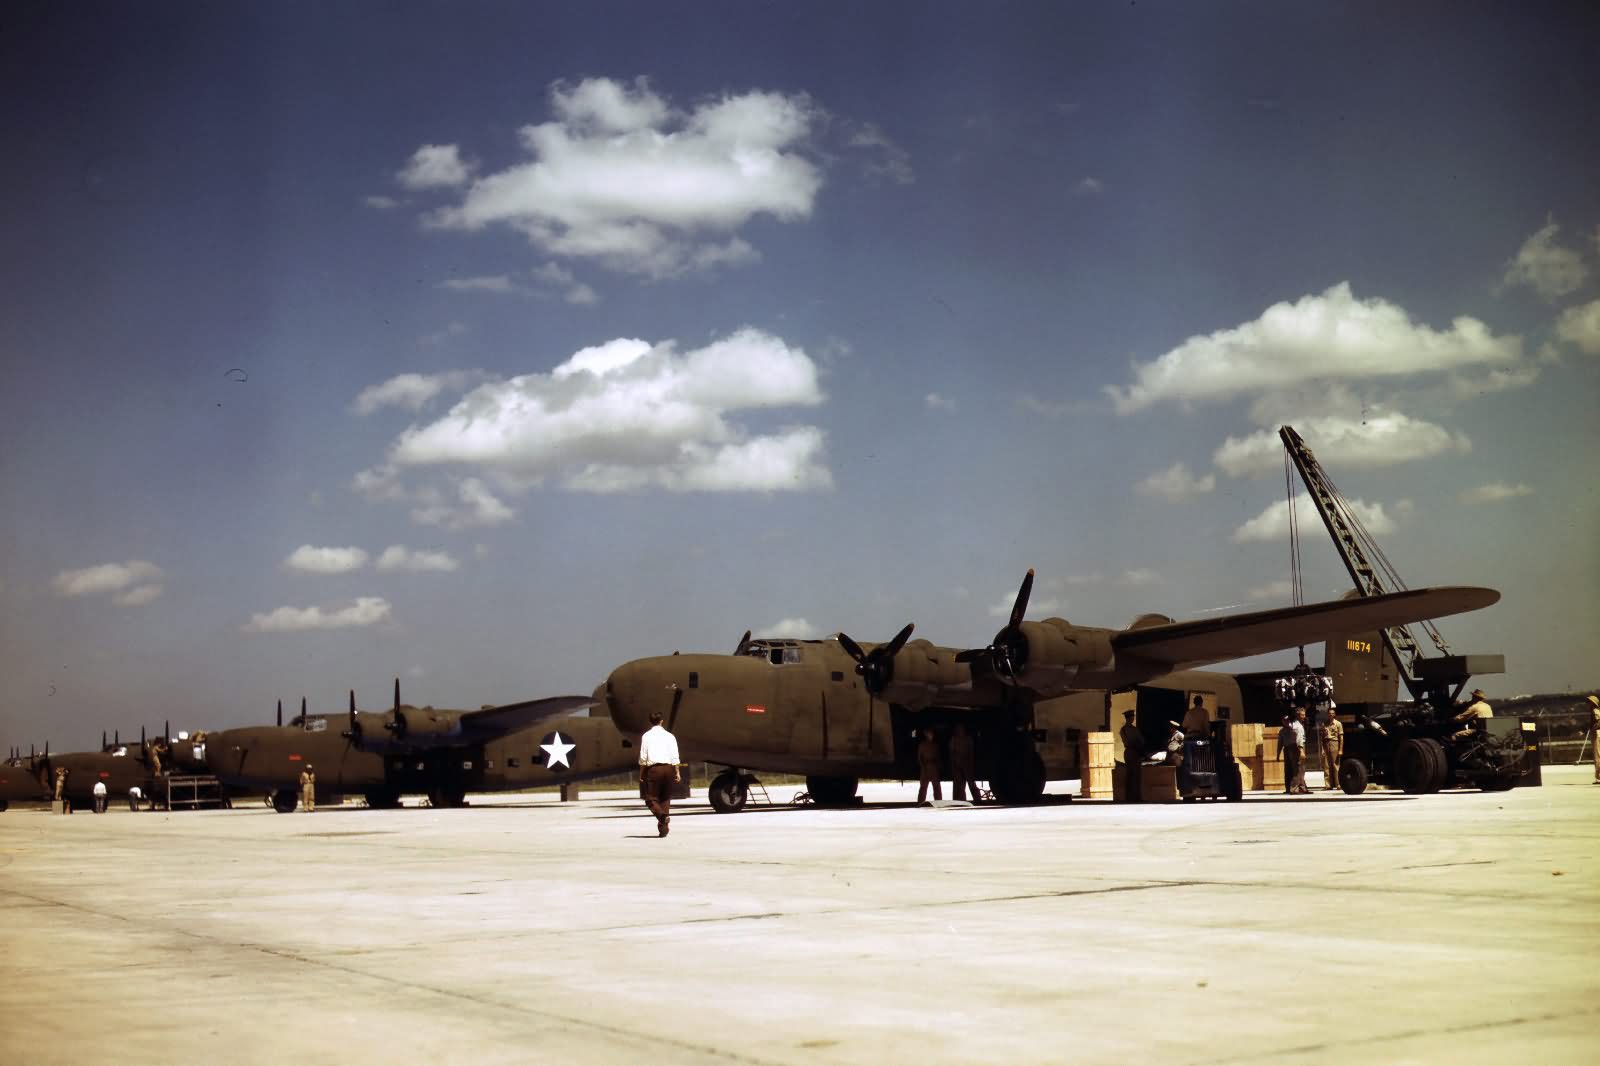 C-87_Liberator_Express_41-11674_Fort_Worth_Airfield_October_1942.jpg